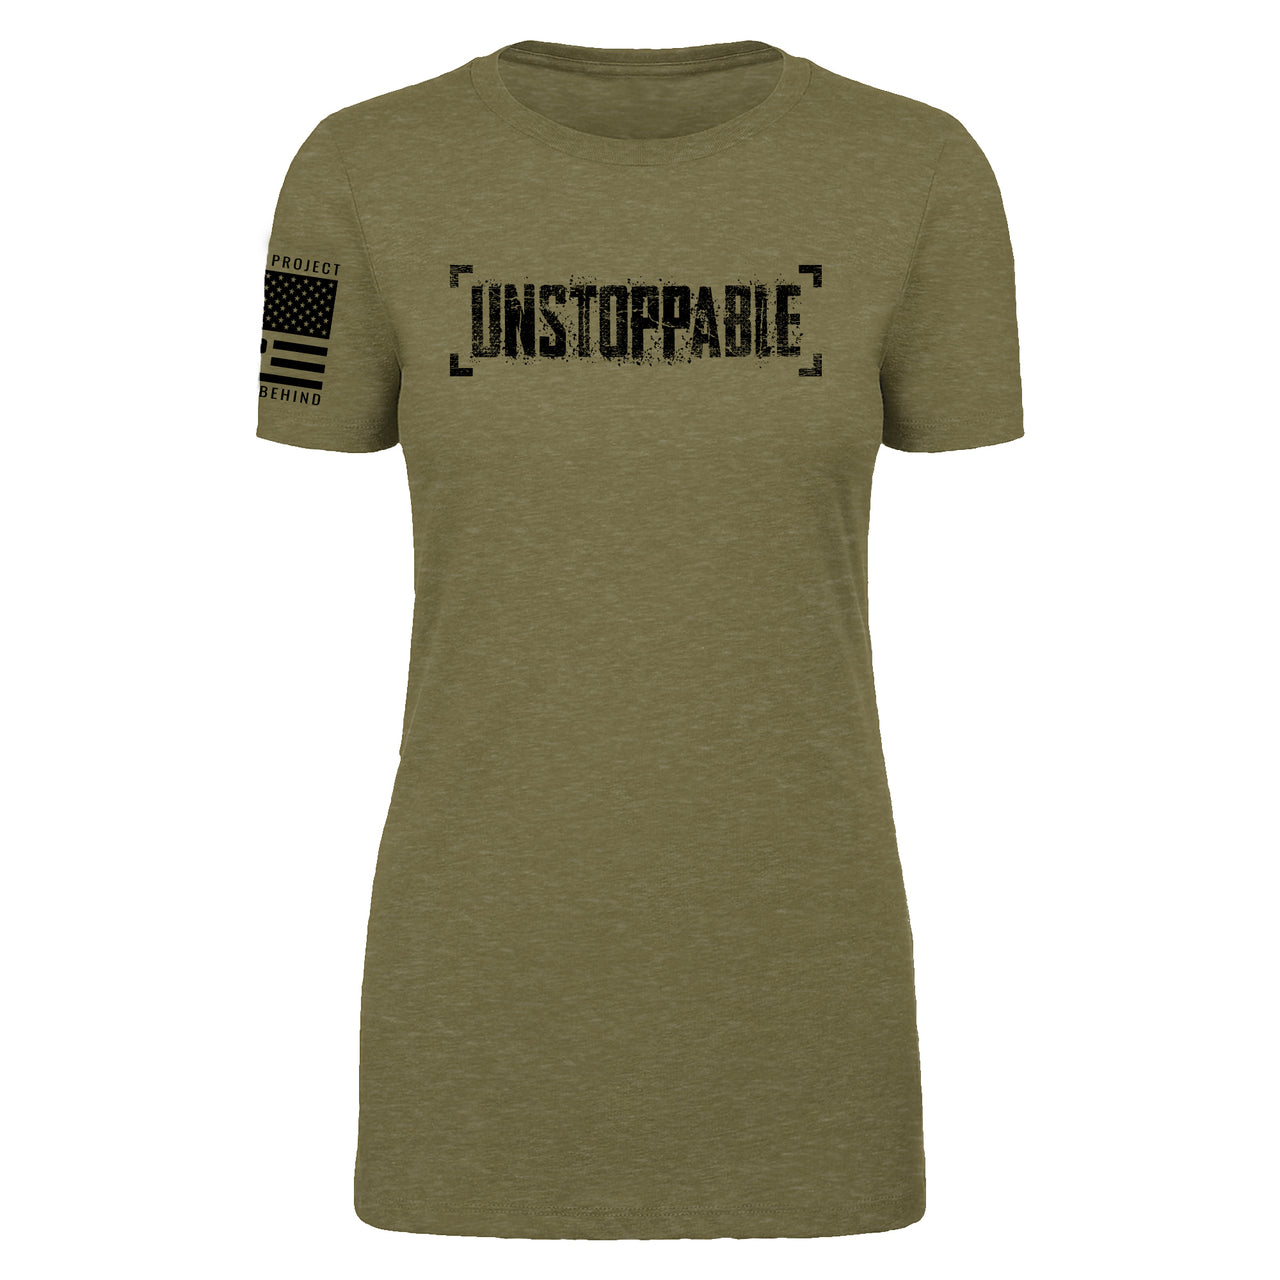 Unstoppable - Women's